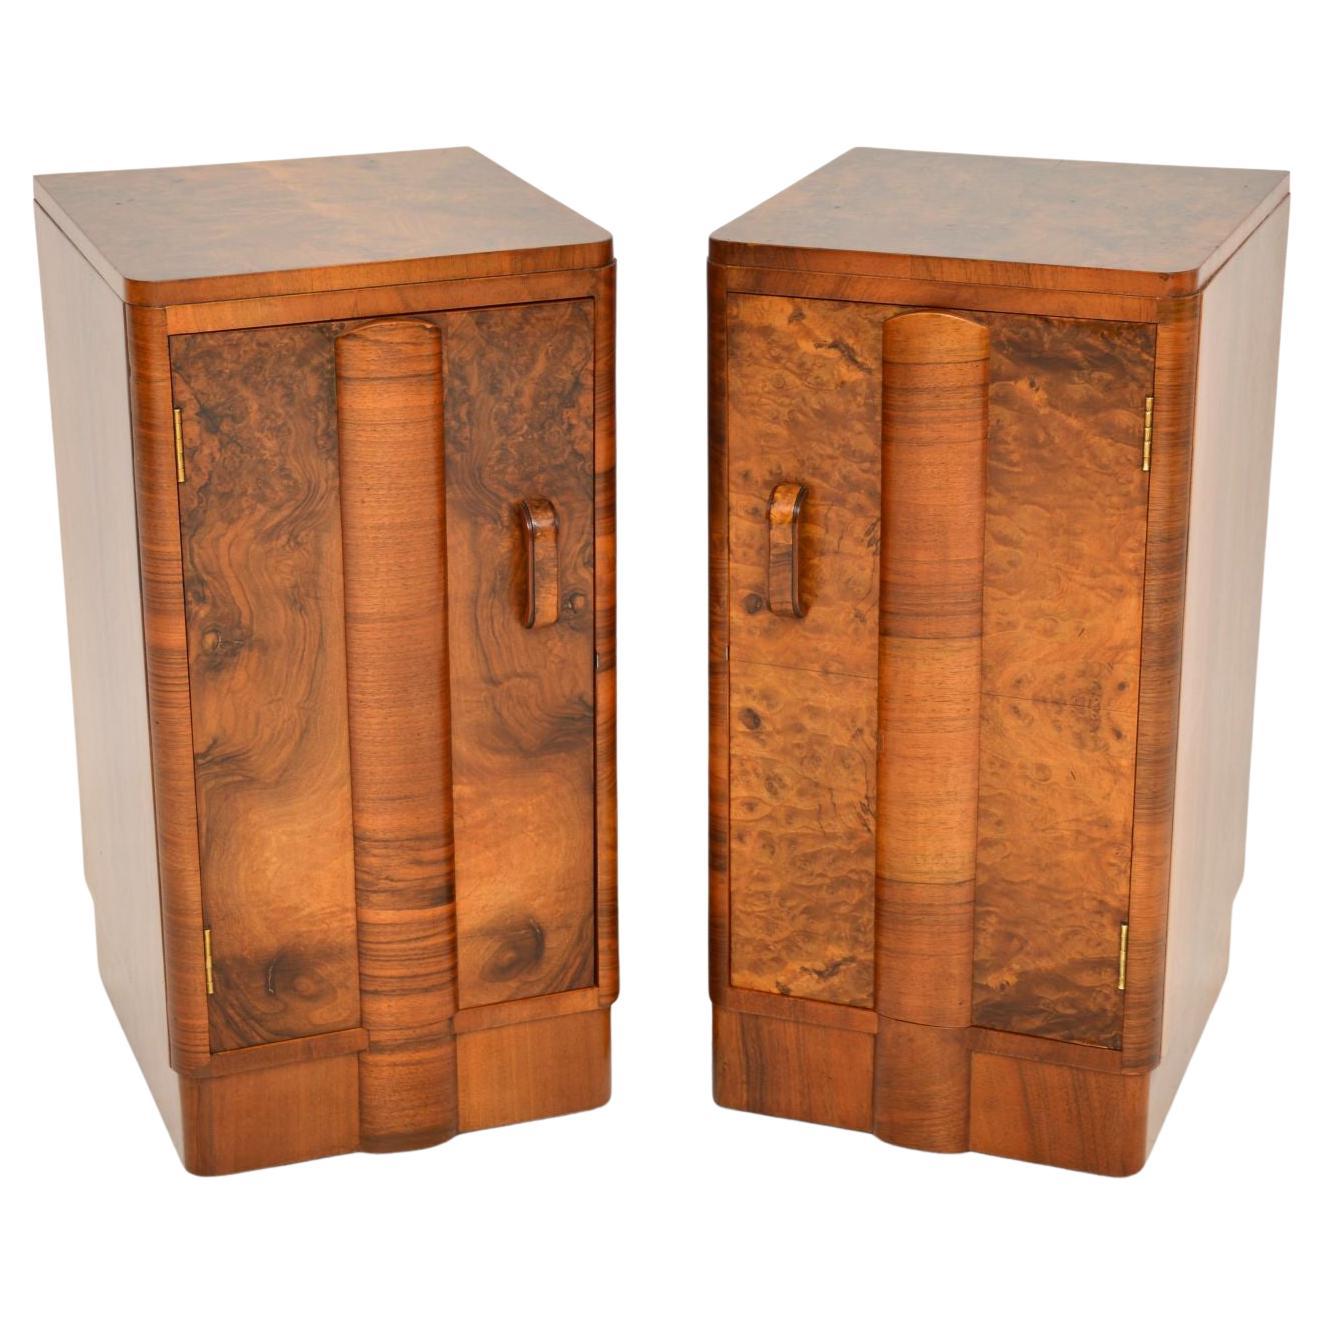 1930's Pair of Art Deco Burr Walnut Bedside Cabinets